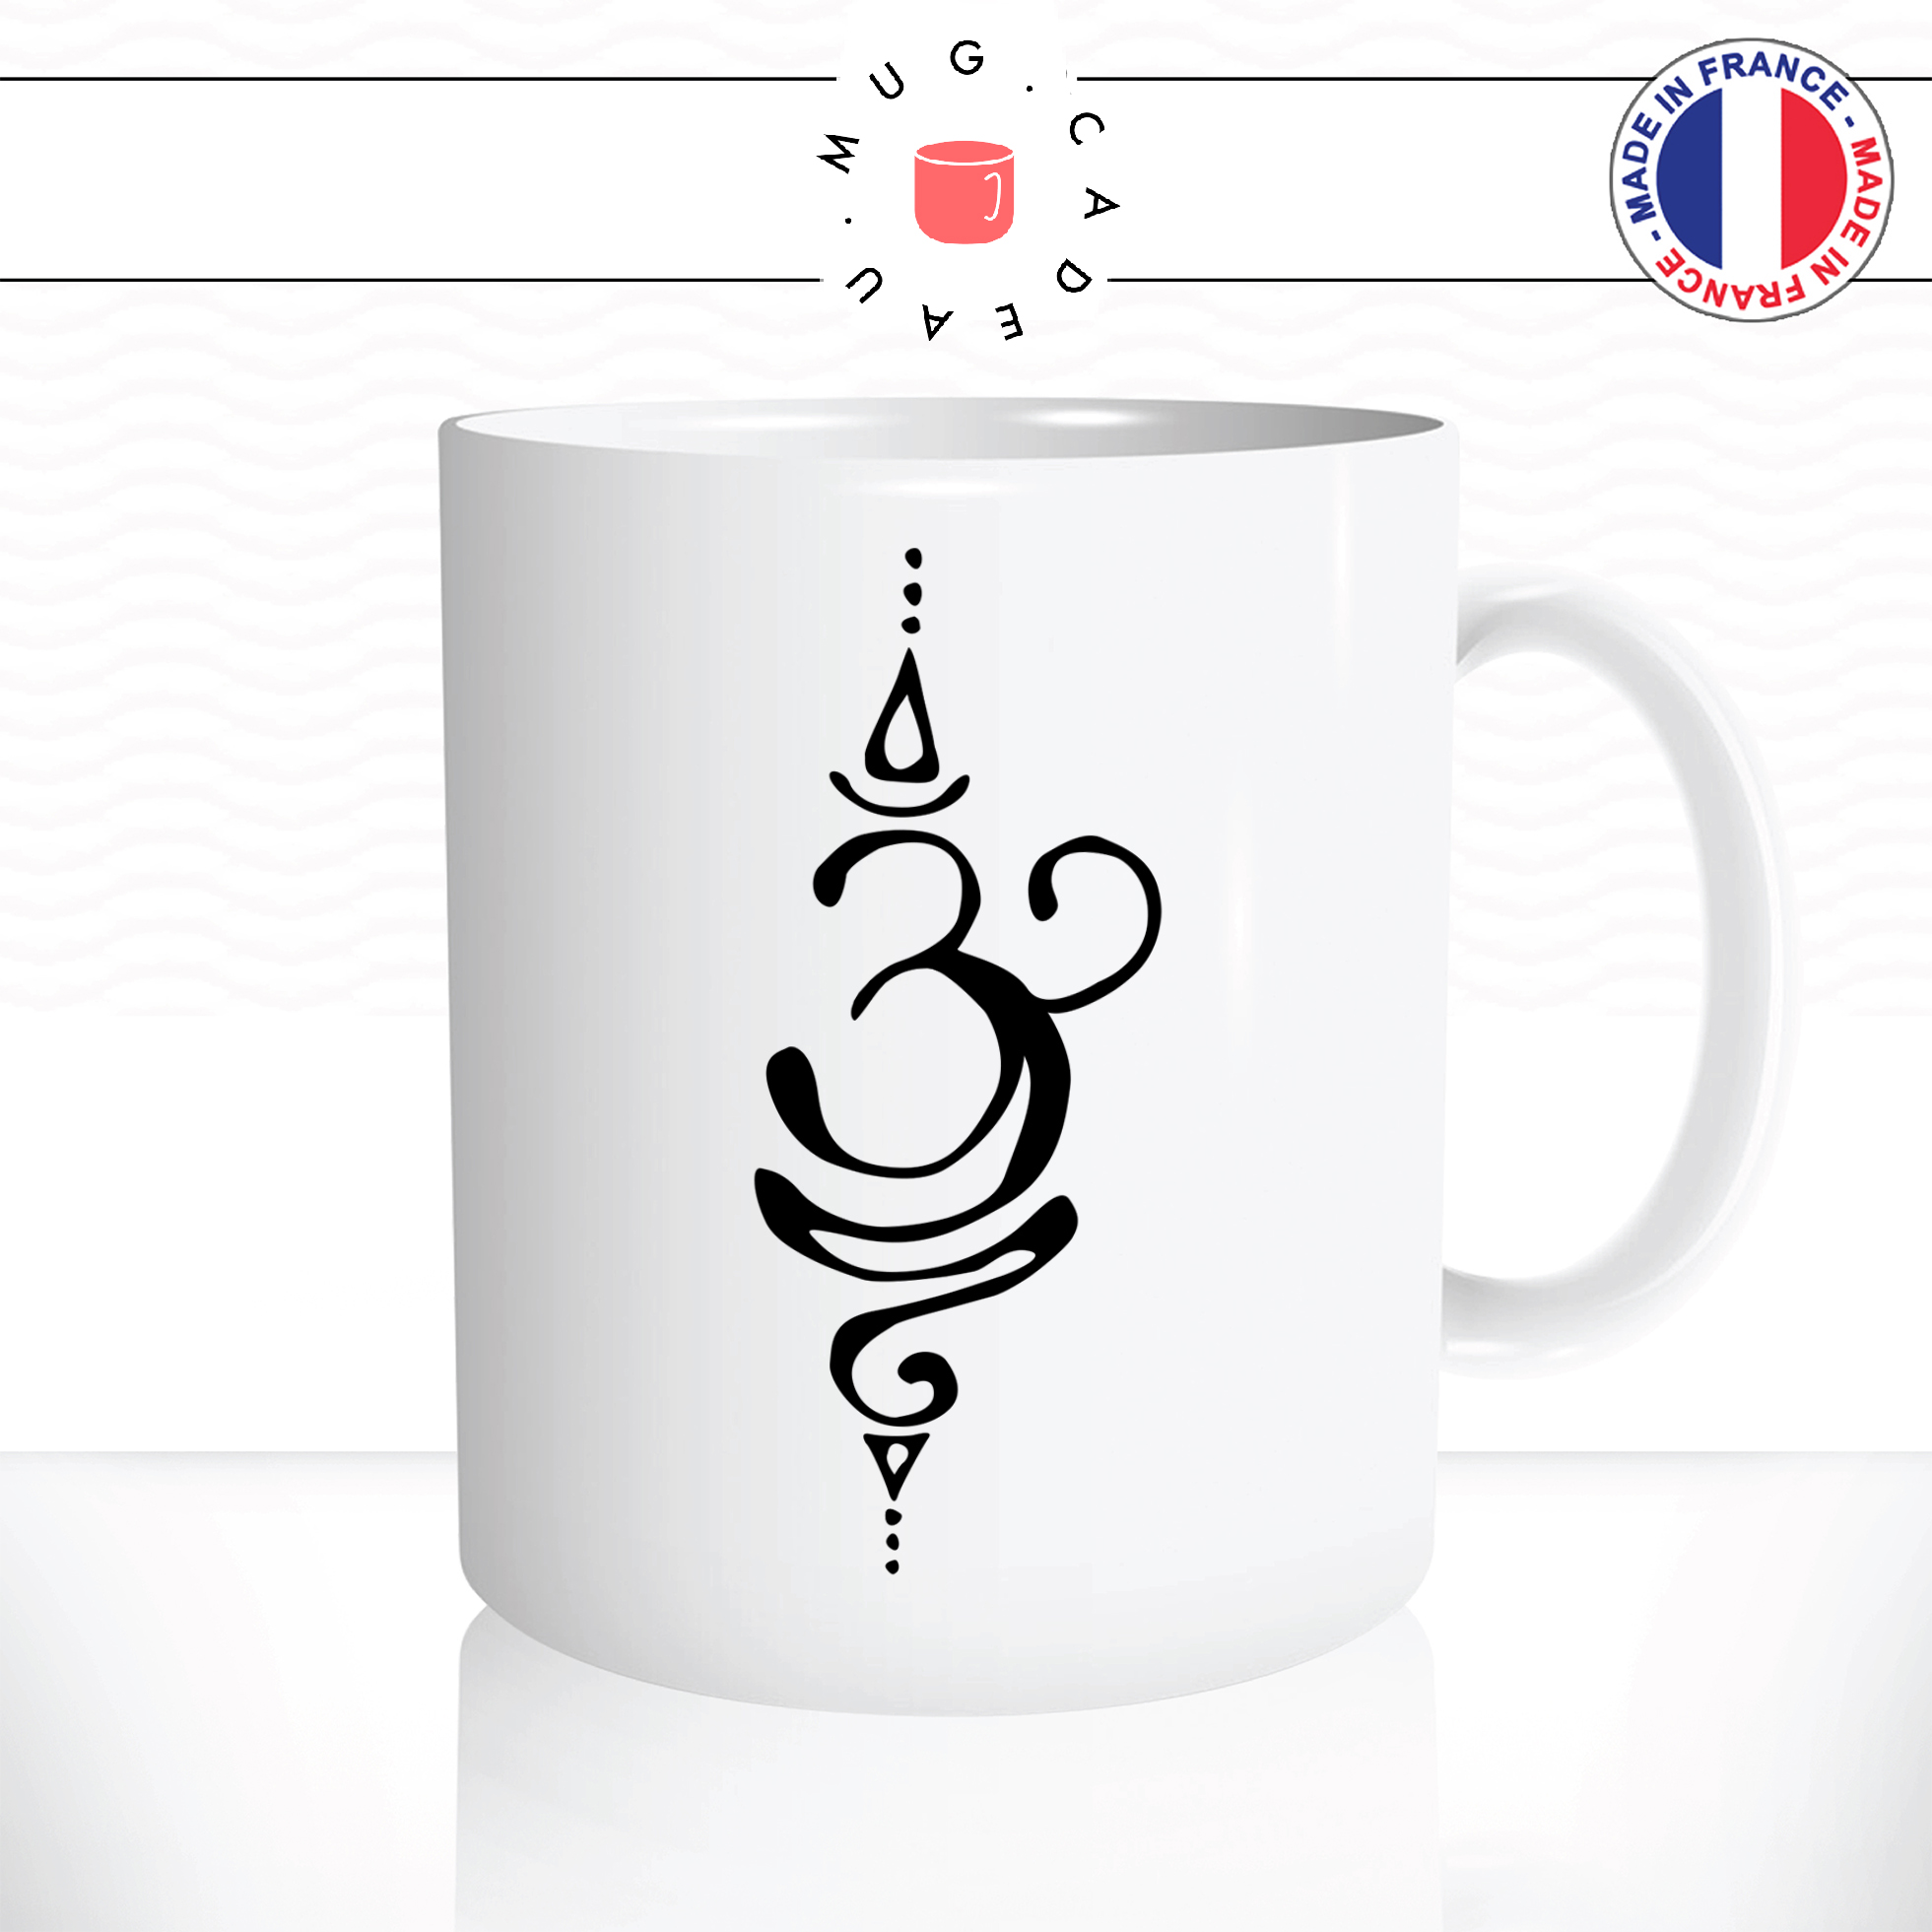 mug-tasse-ref3-religions-bouddhiste-OM-Dieu-symbol-dessin-arabesques-cafe-the-mugs-tasses-personnalise-anse-droite